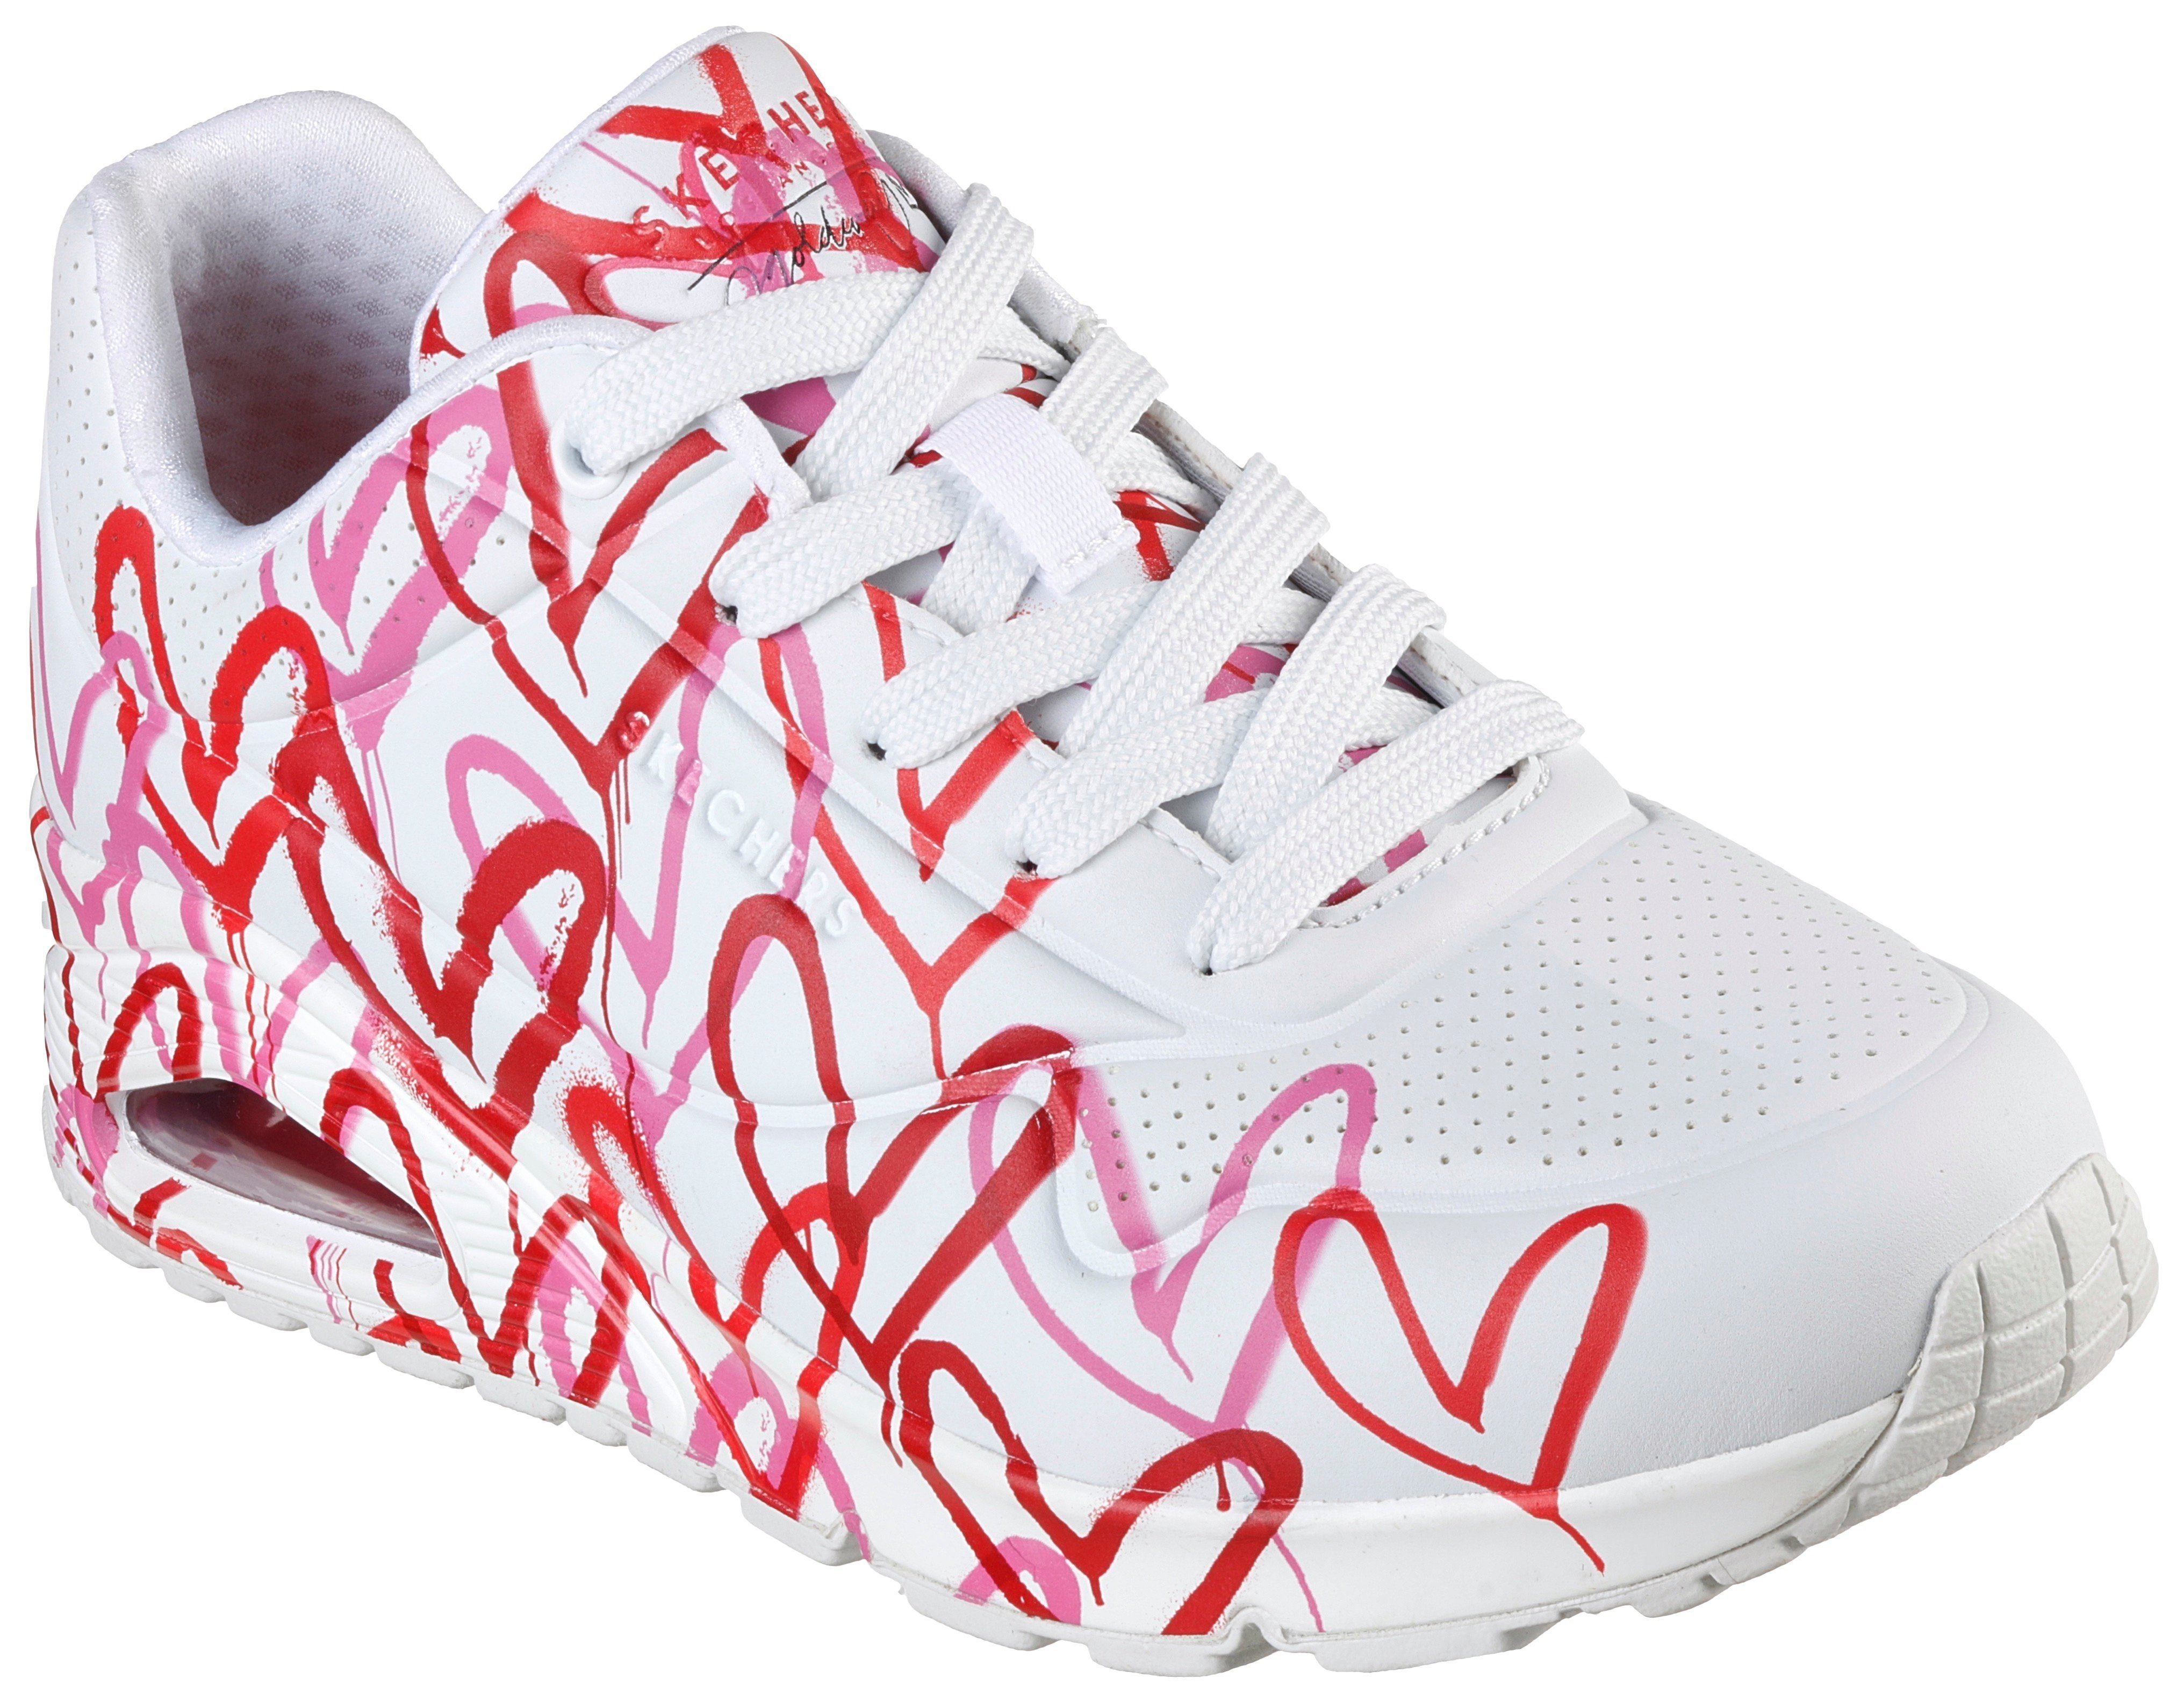 Skechers UNO-SPREAD THE LOVE Wedgesneaker mit auffälligem Graffiti-Print weiß-rot